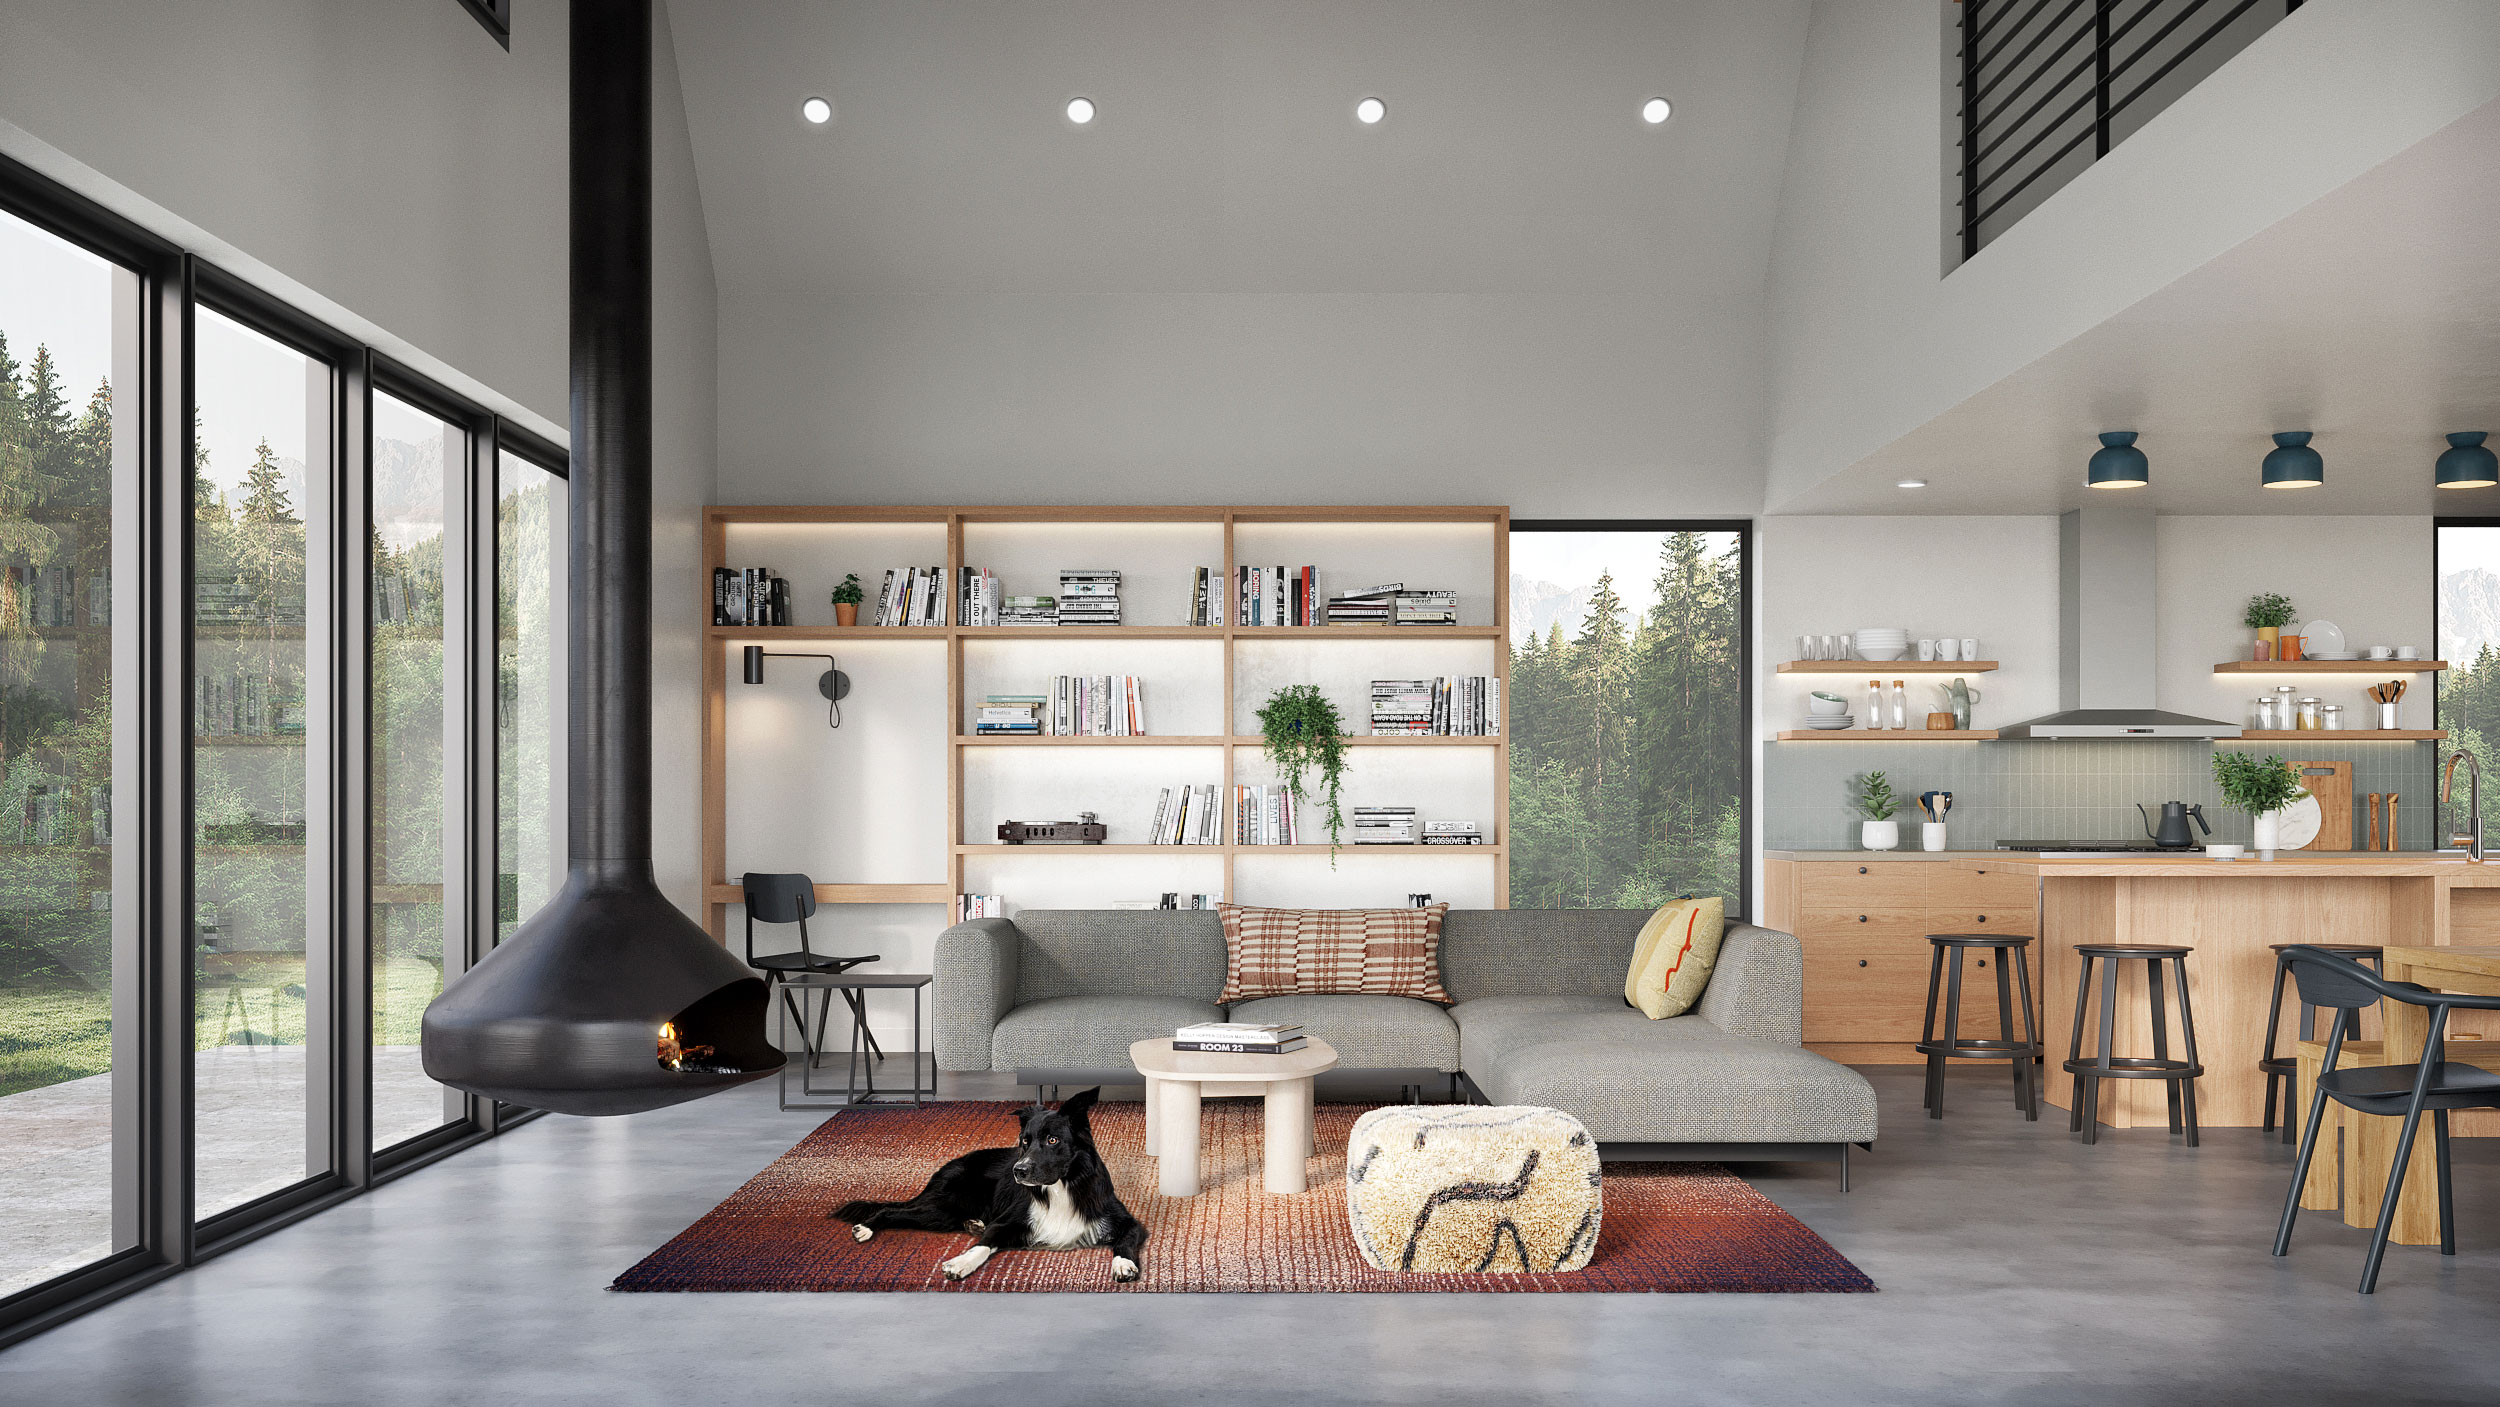 Prefab home interior design